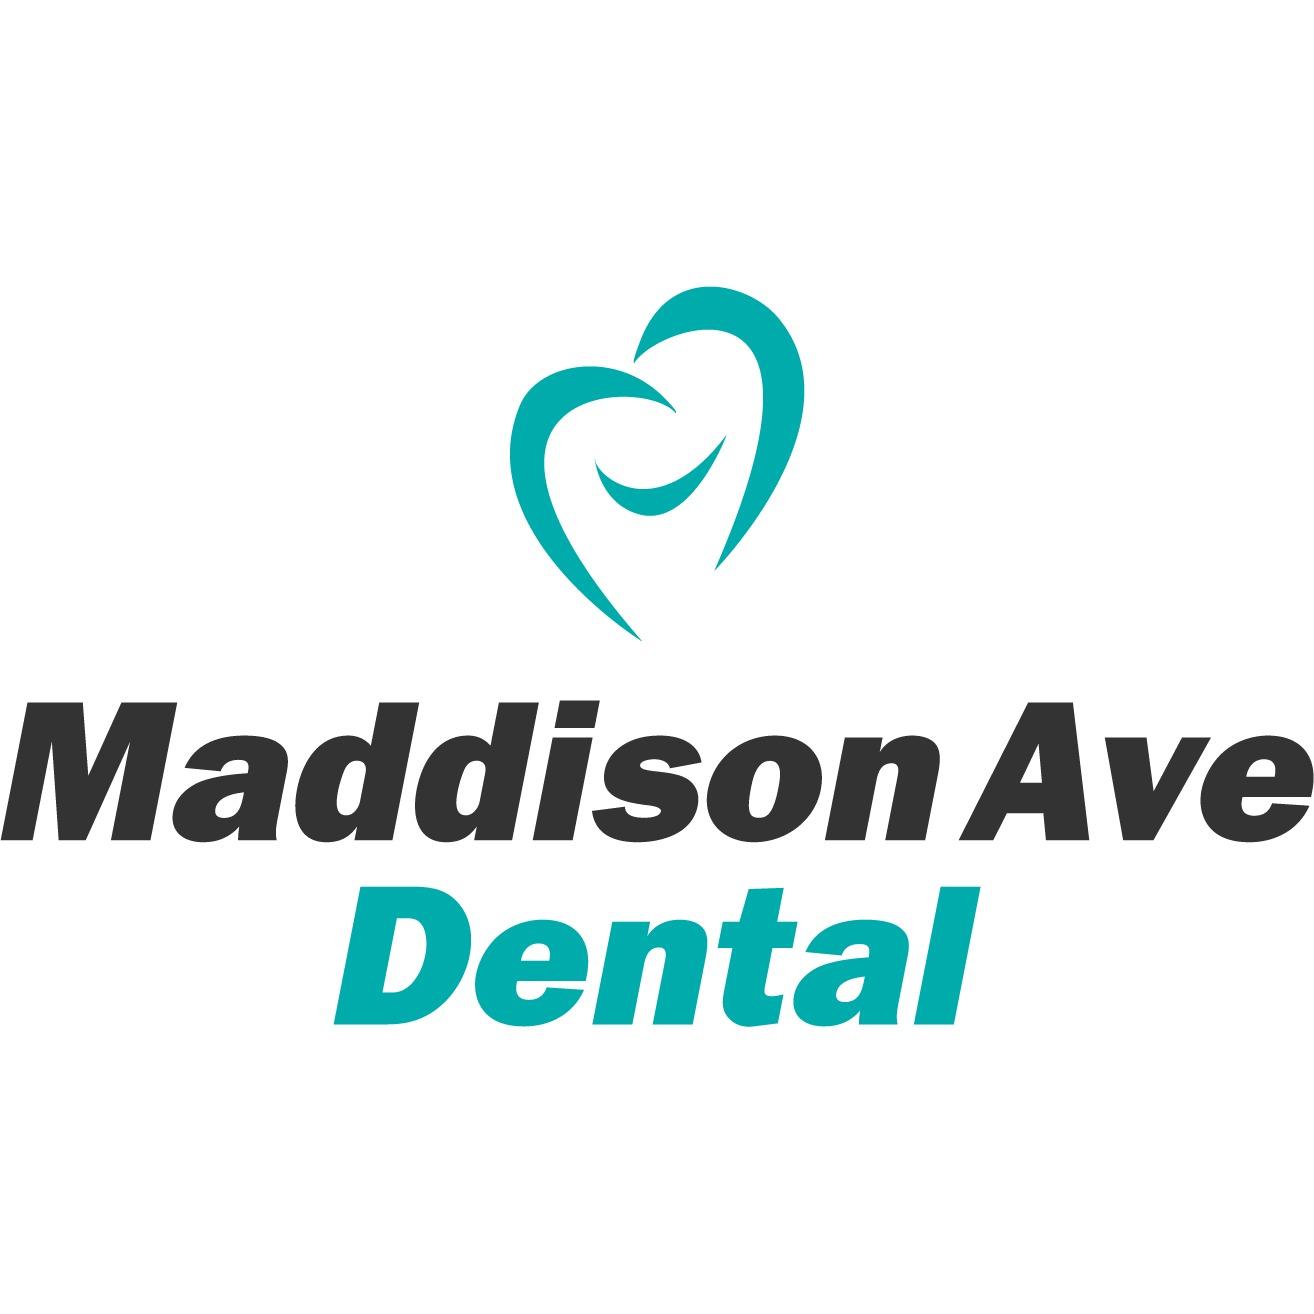 Maddison Ave Dental